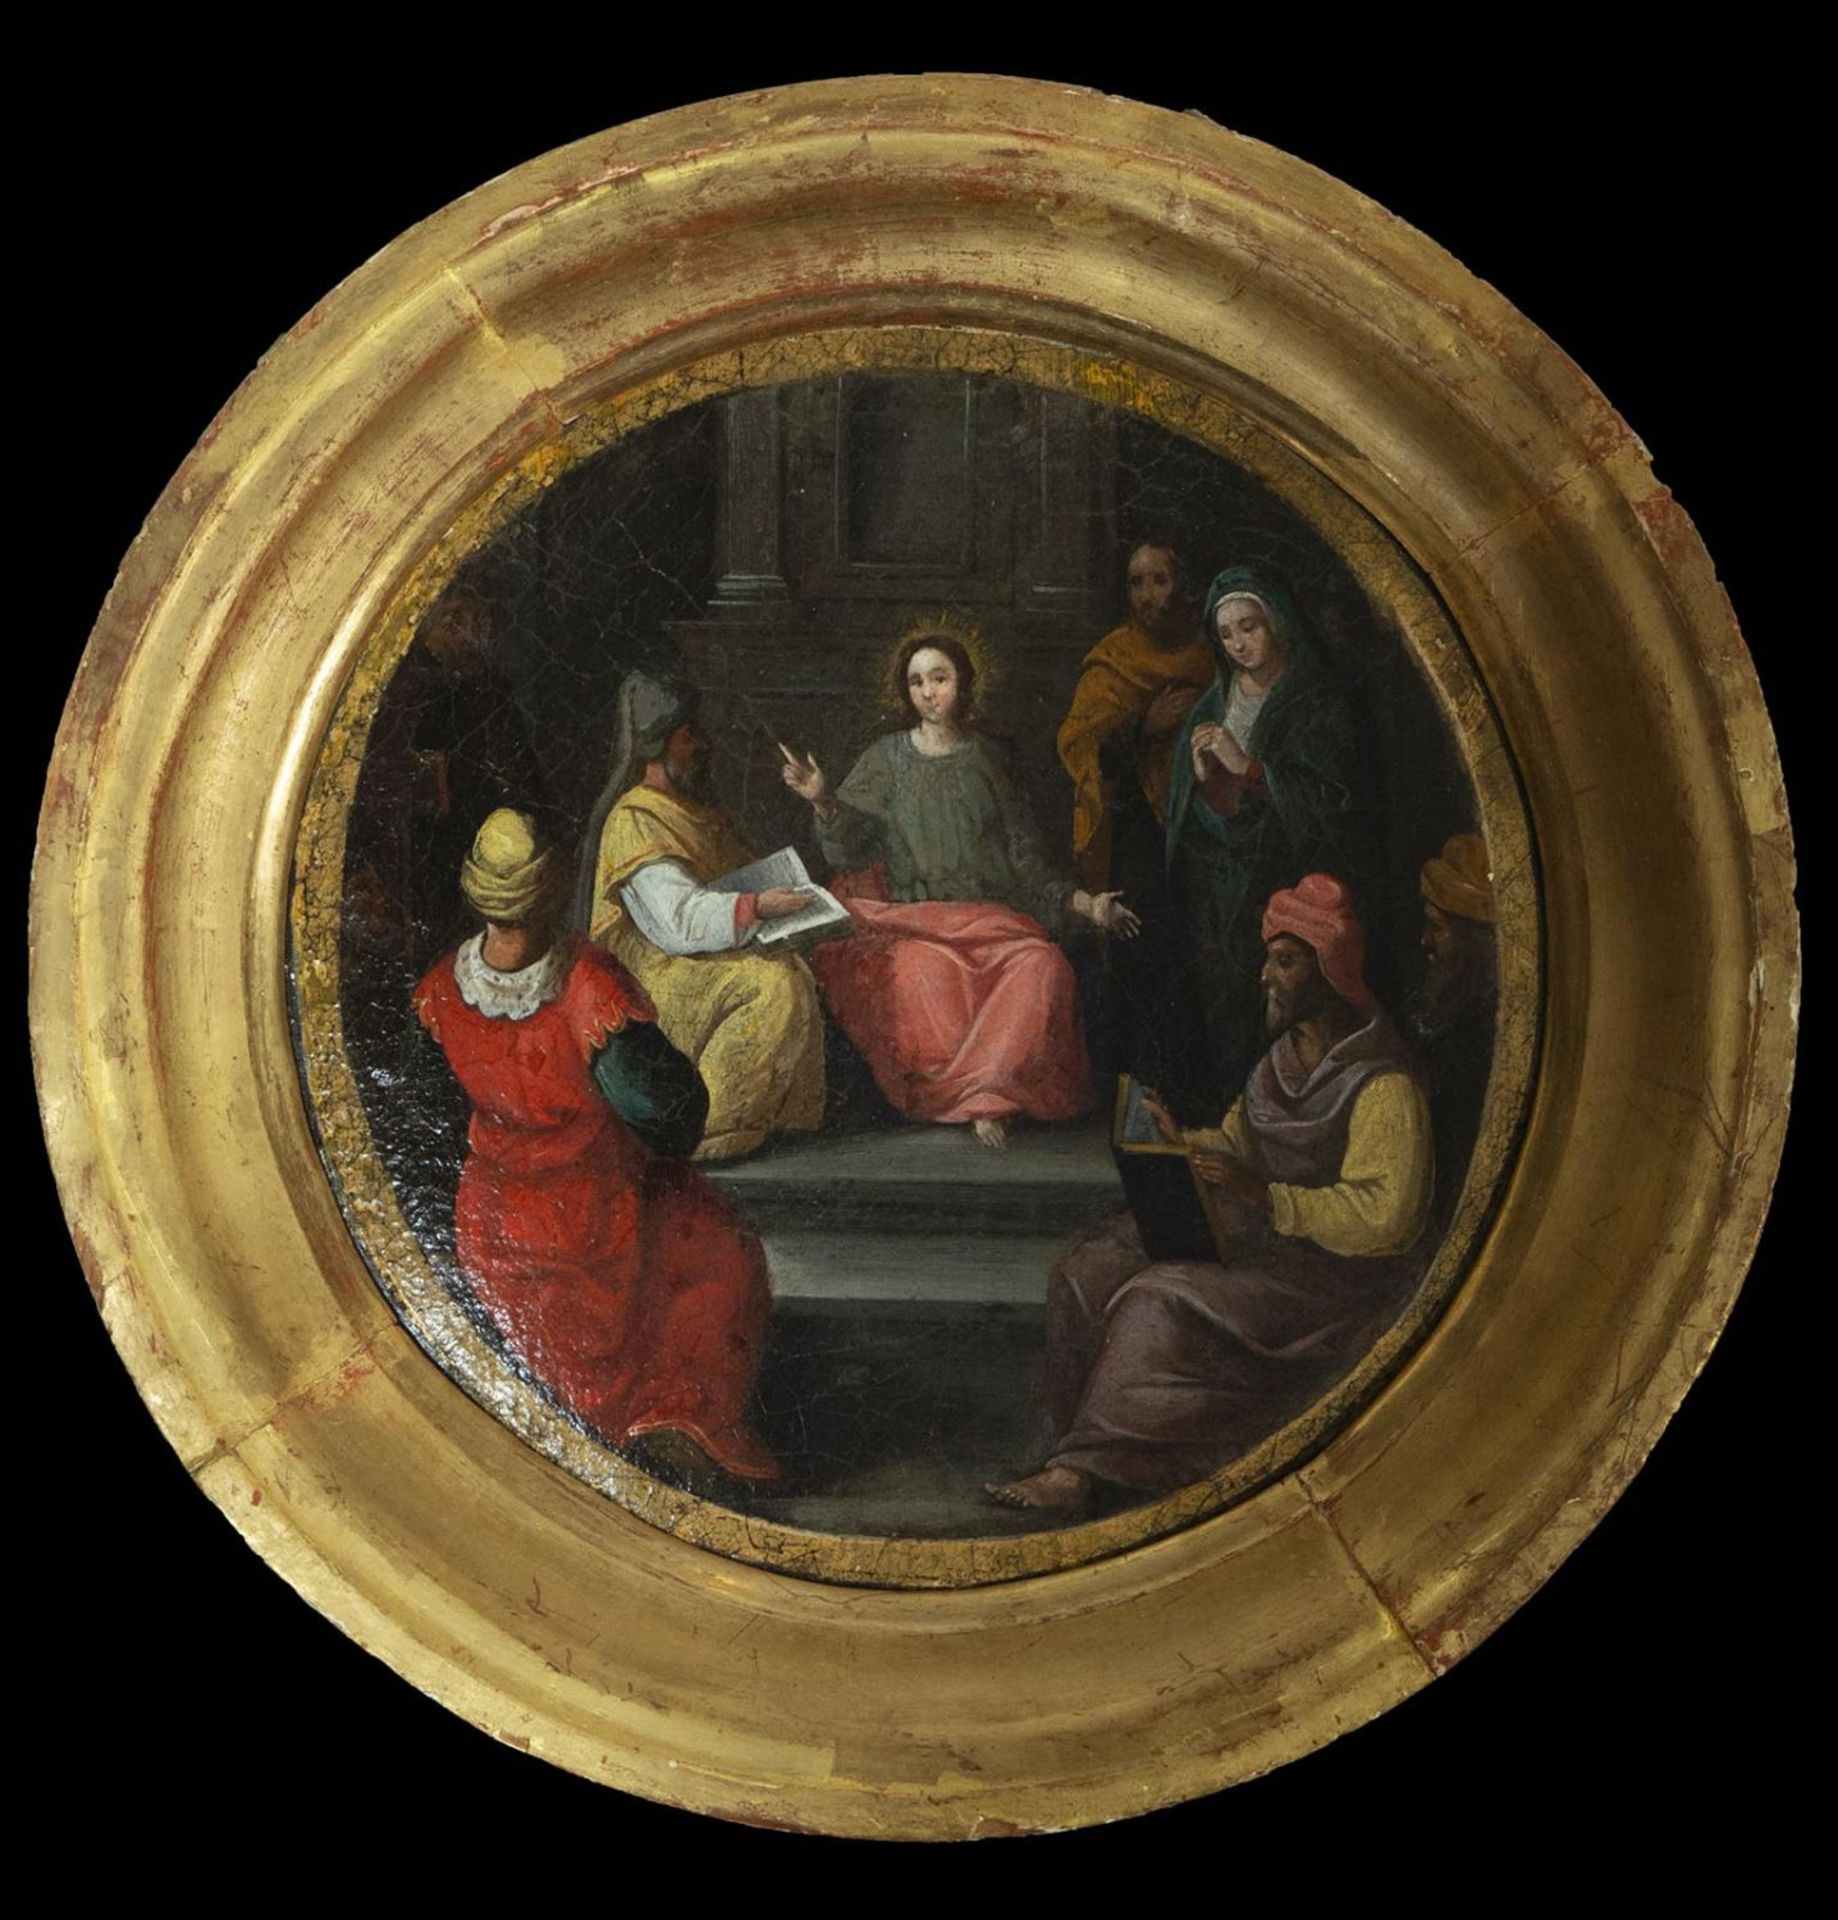 Jesus preaching in the Temple, Italo-Flemish school of the 17th century